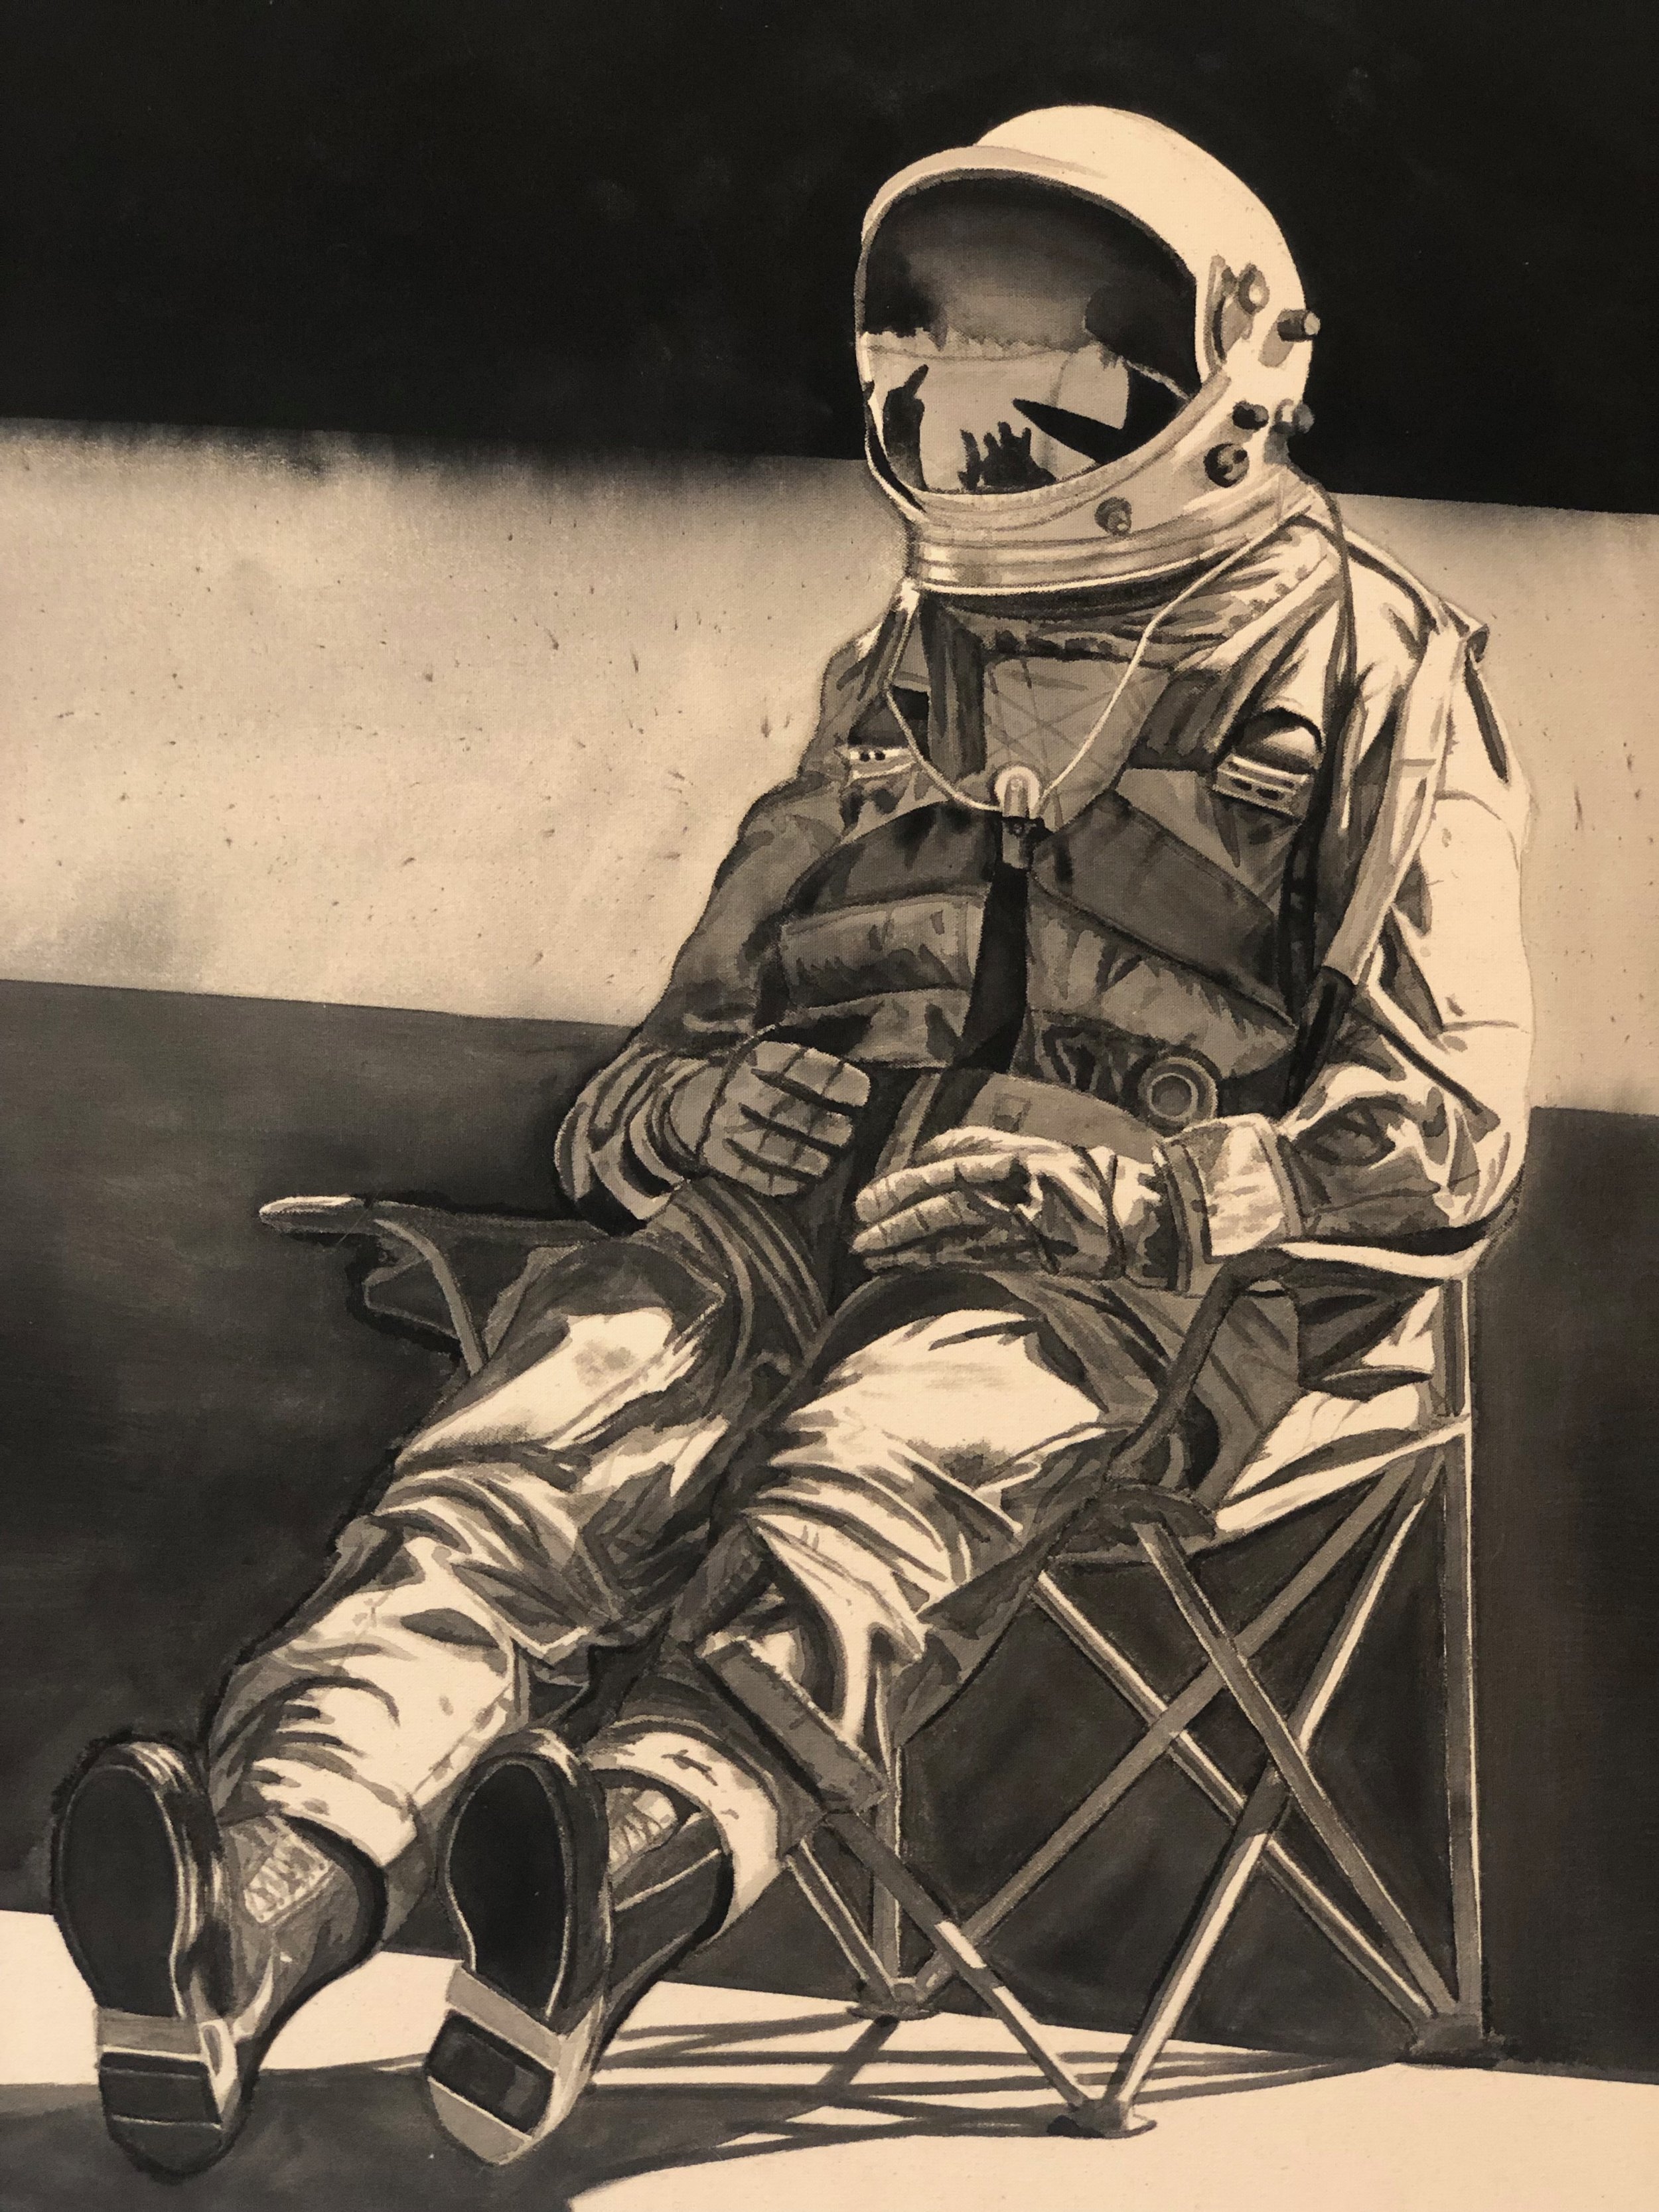   The Astronaut  [detail], 2019 Black gesso on canvas 36 x 48 inches (91.4cm x 122cm) 